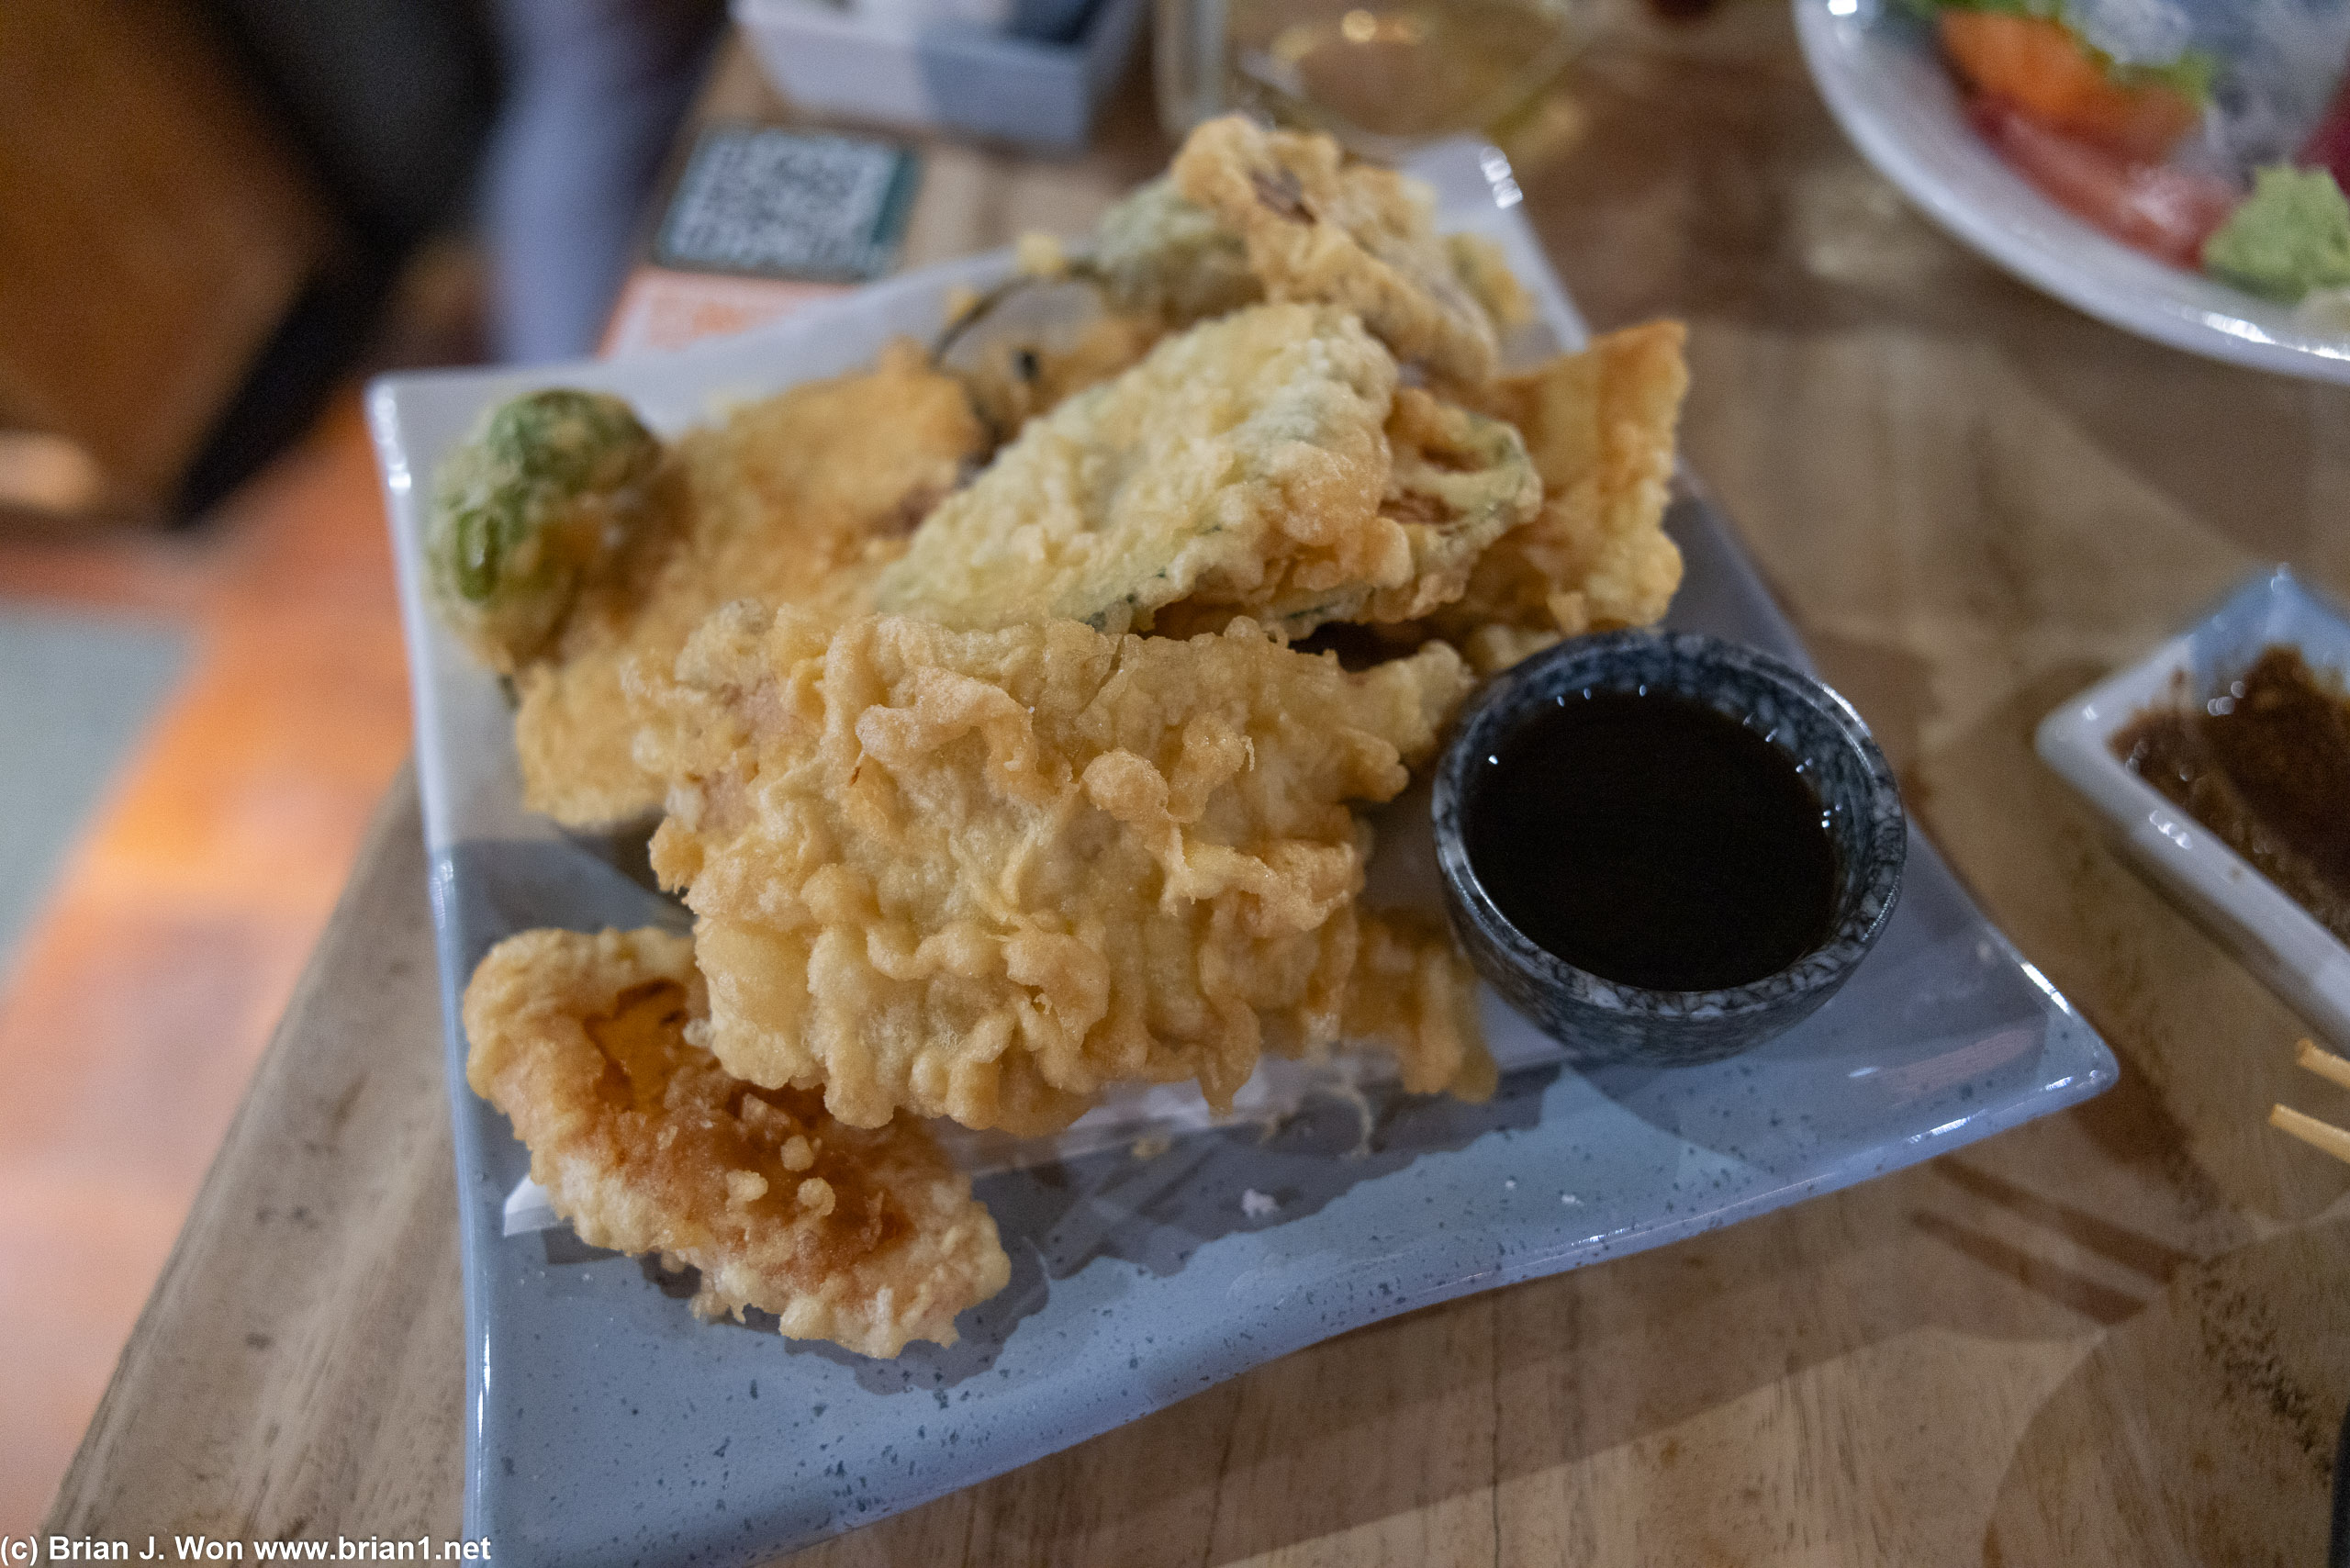 Veggie tempura was massive.